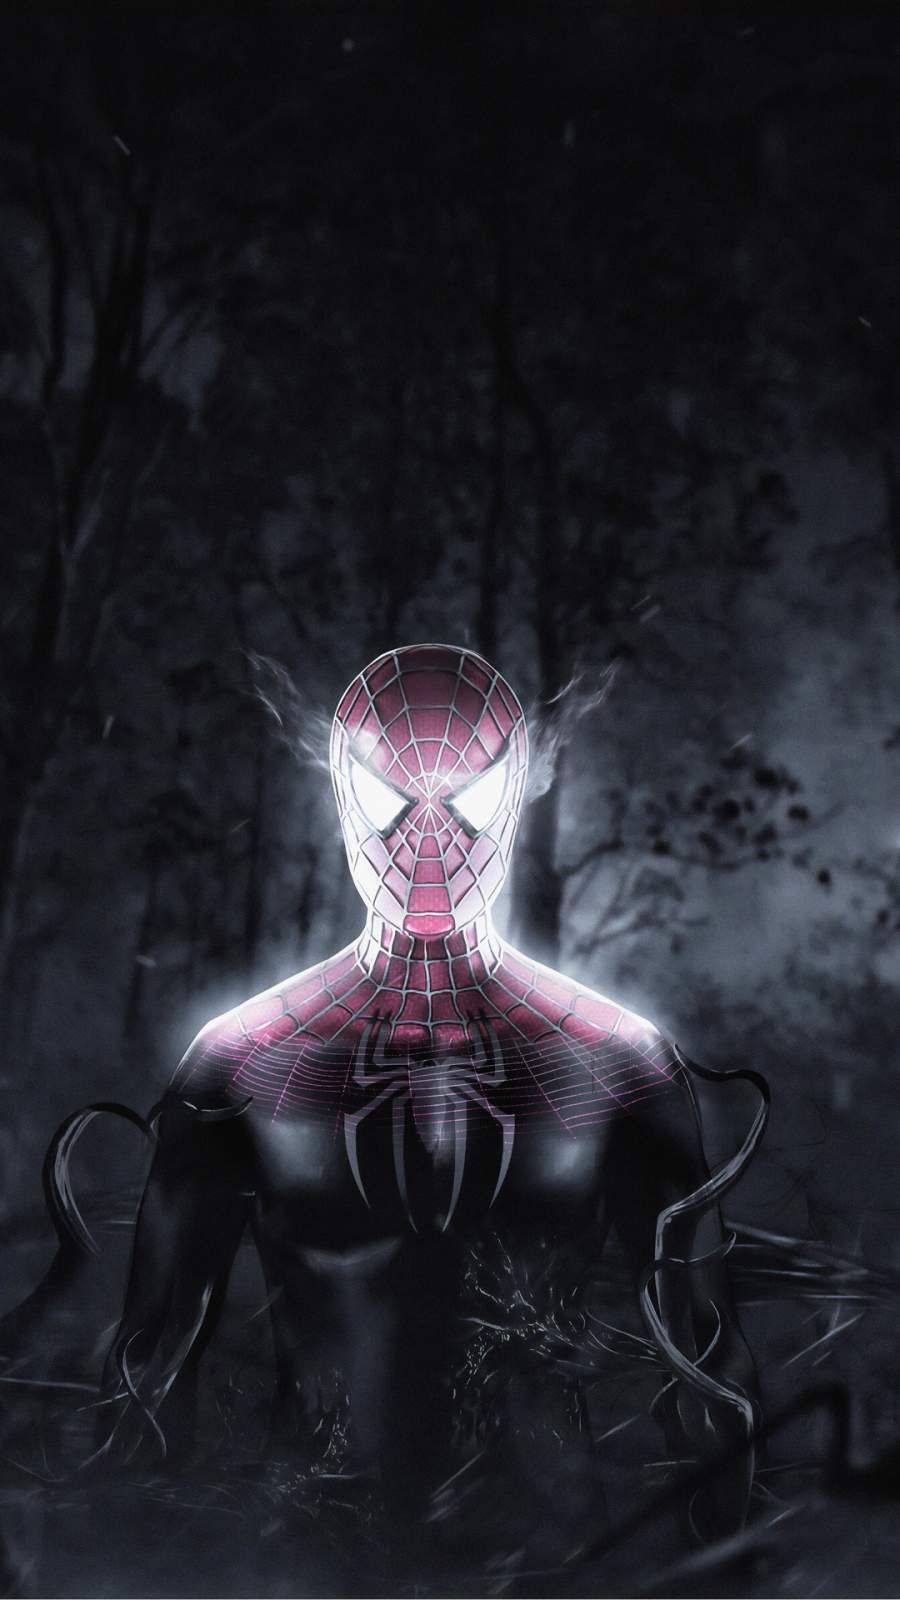 Venom Inside Spiderman IPhone Wallpaper - IPhone Wallpapers : iPhone  Wallpapers